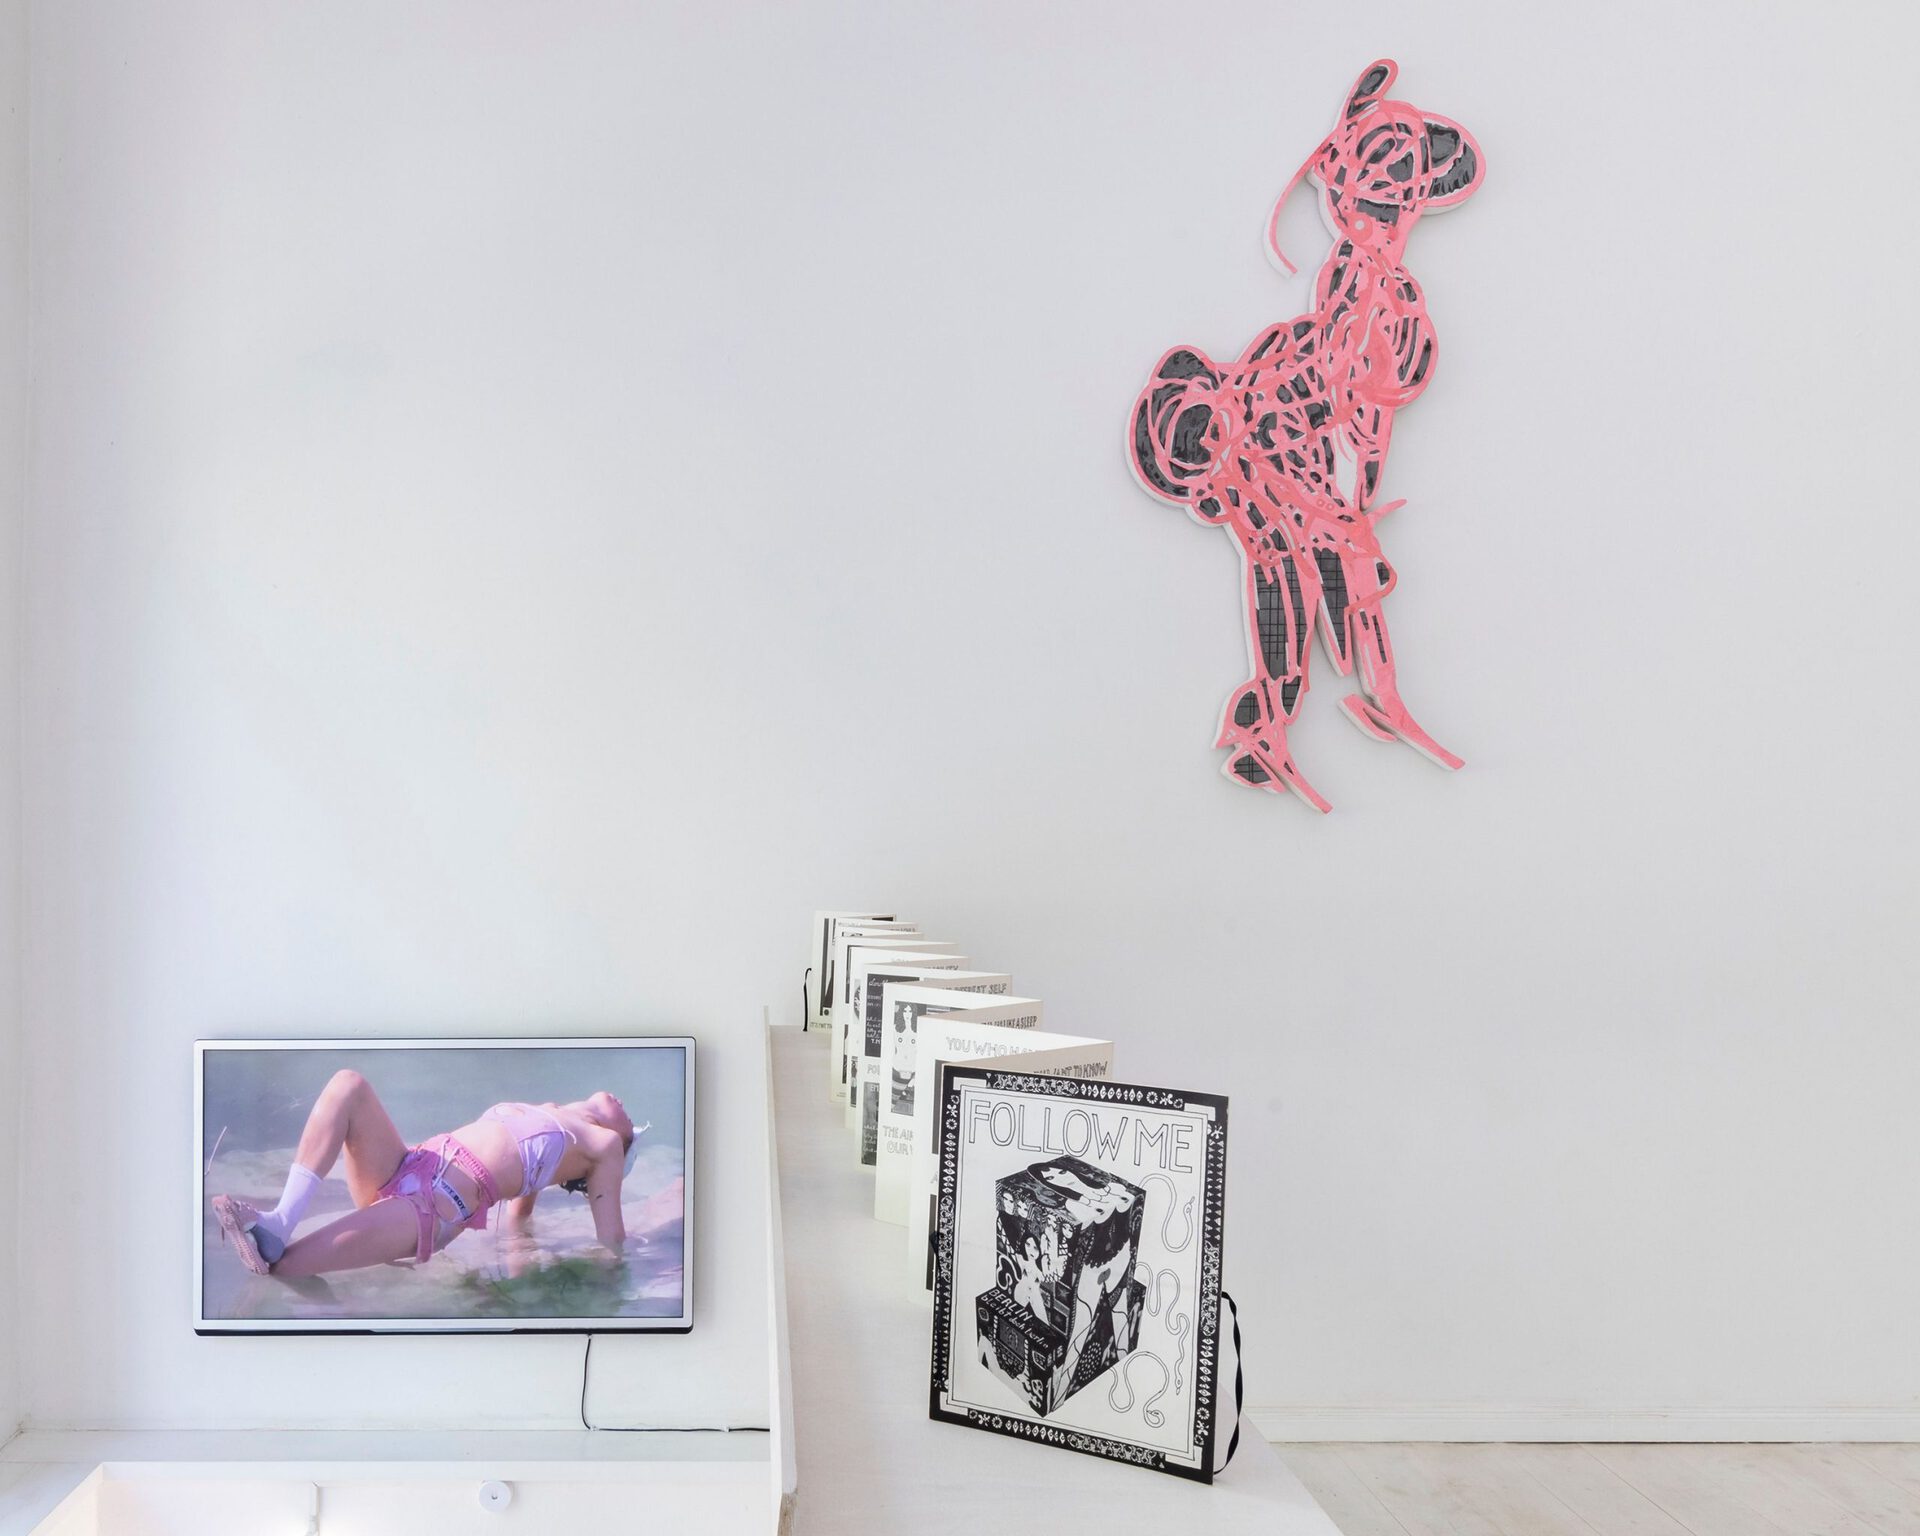 Video: Young Boy Dancing Group, 2021, HD, Loop, 3:44 min / Wall: Caroline Eidner, Untitled (Lady T-Rex), 2019, pigmented plaster, mounted on styrofoam, wood, 155 × 65 cm / Artist Book: Dorothy Iannone, Follow Me, 1978